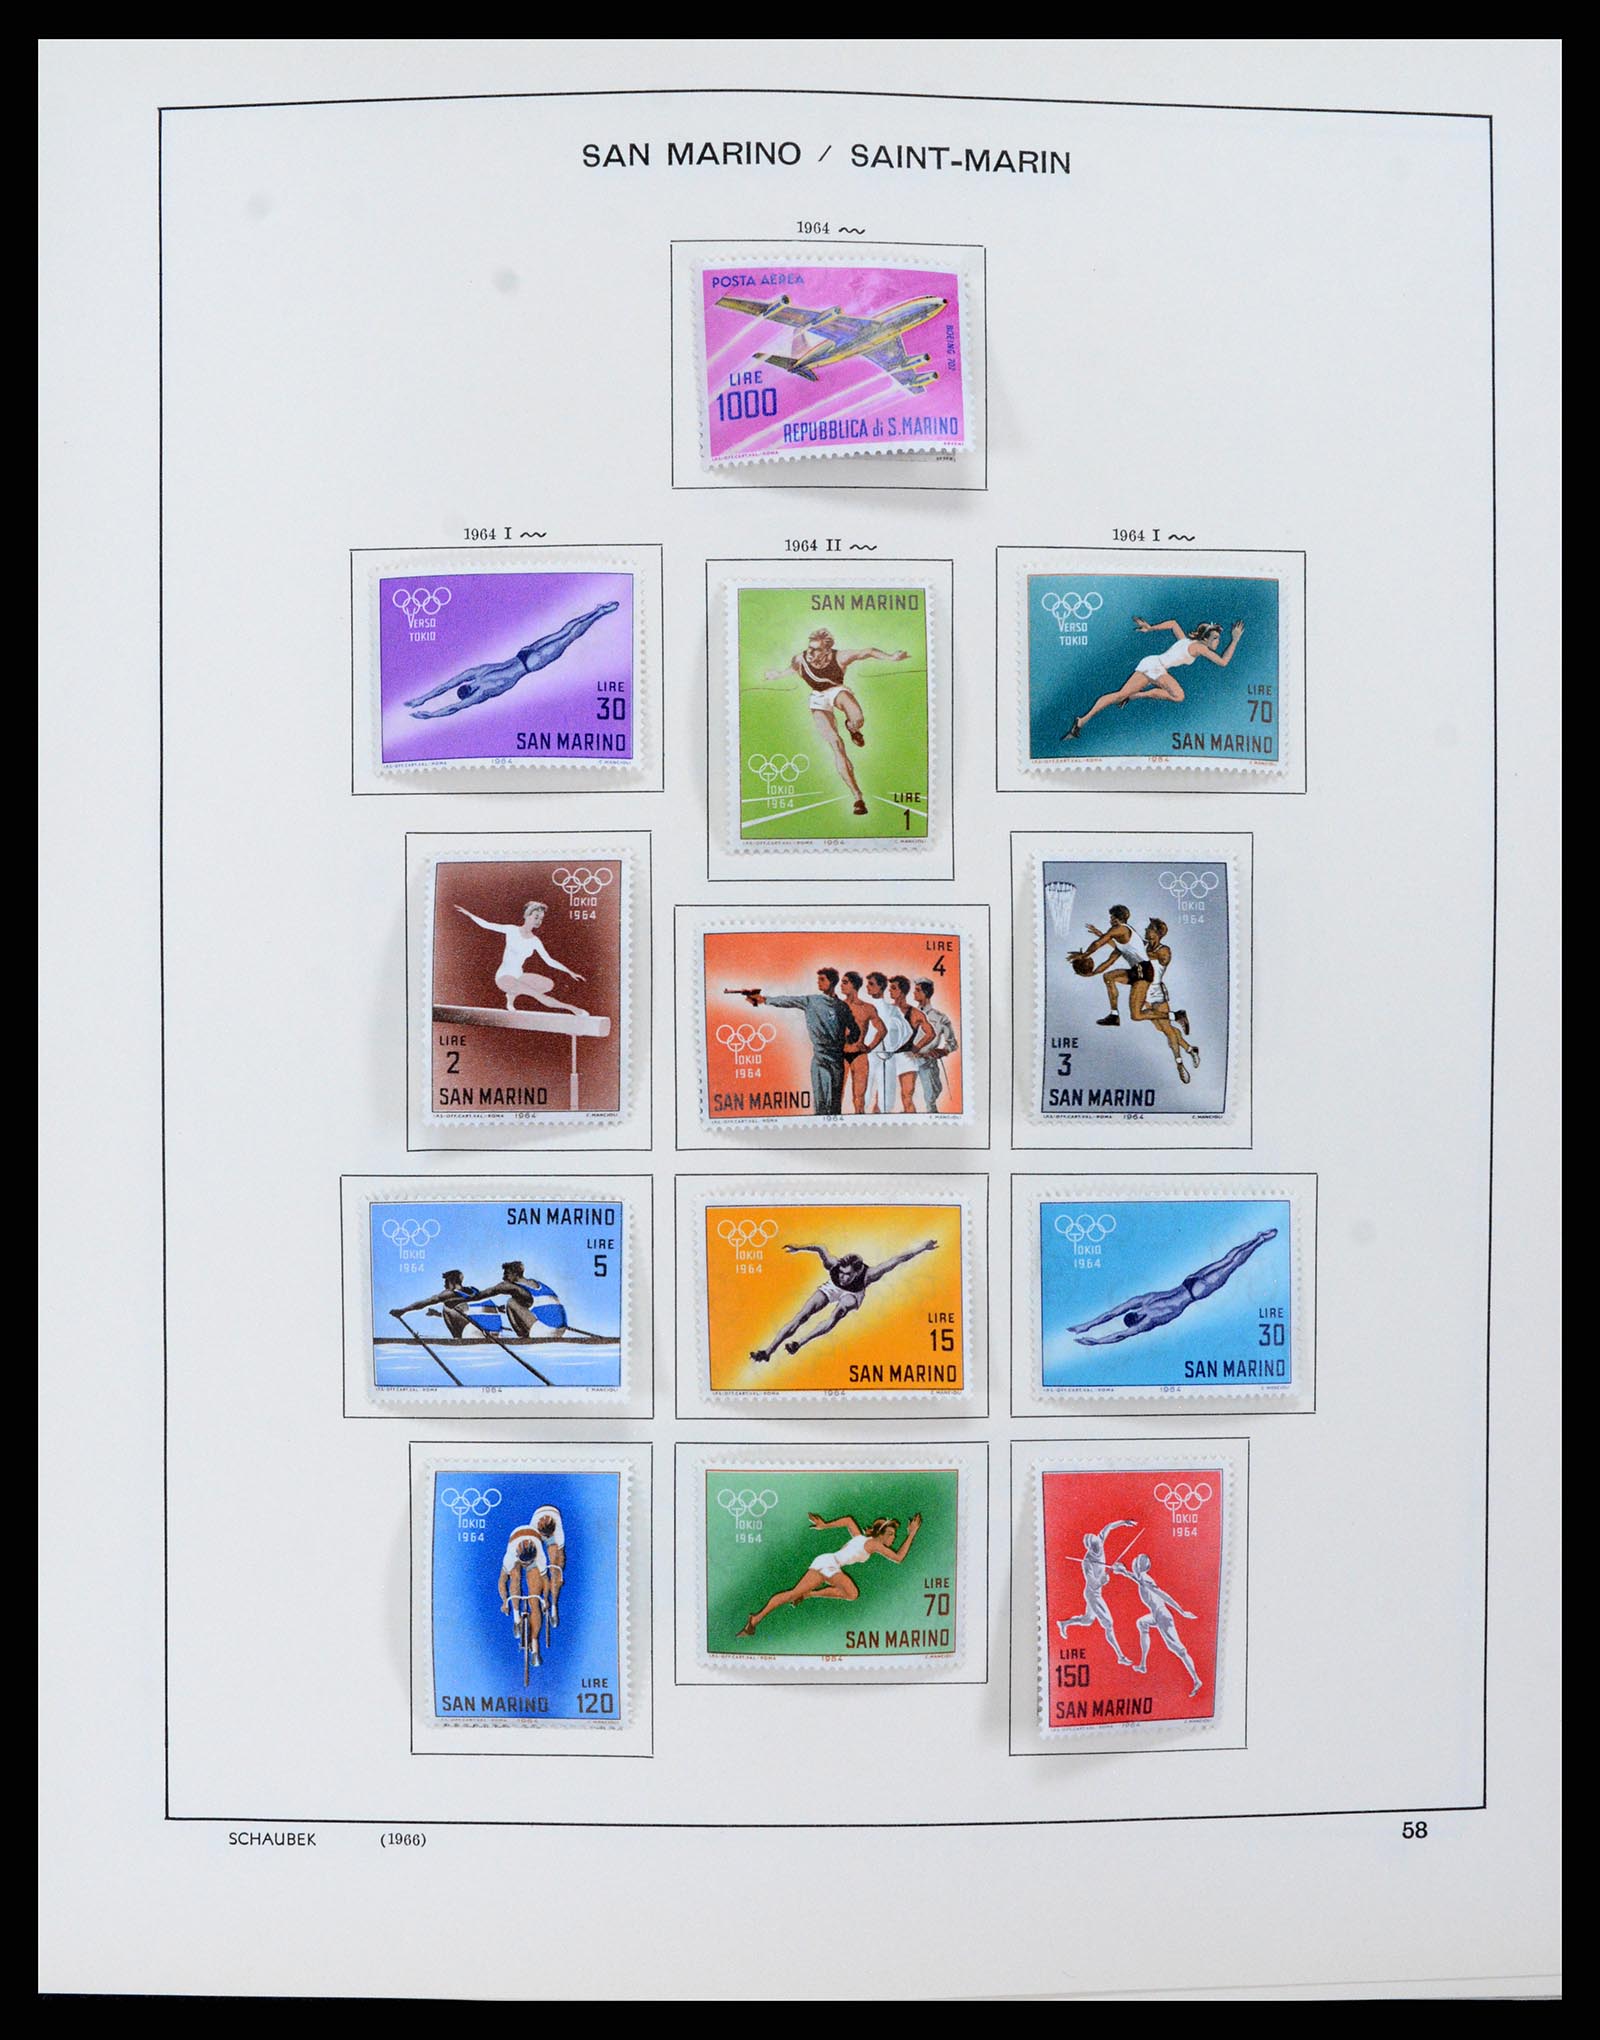 37556 061 - Stamp collection 37556 San Marino 1877-2017.